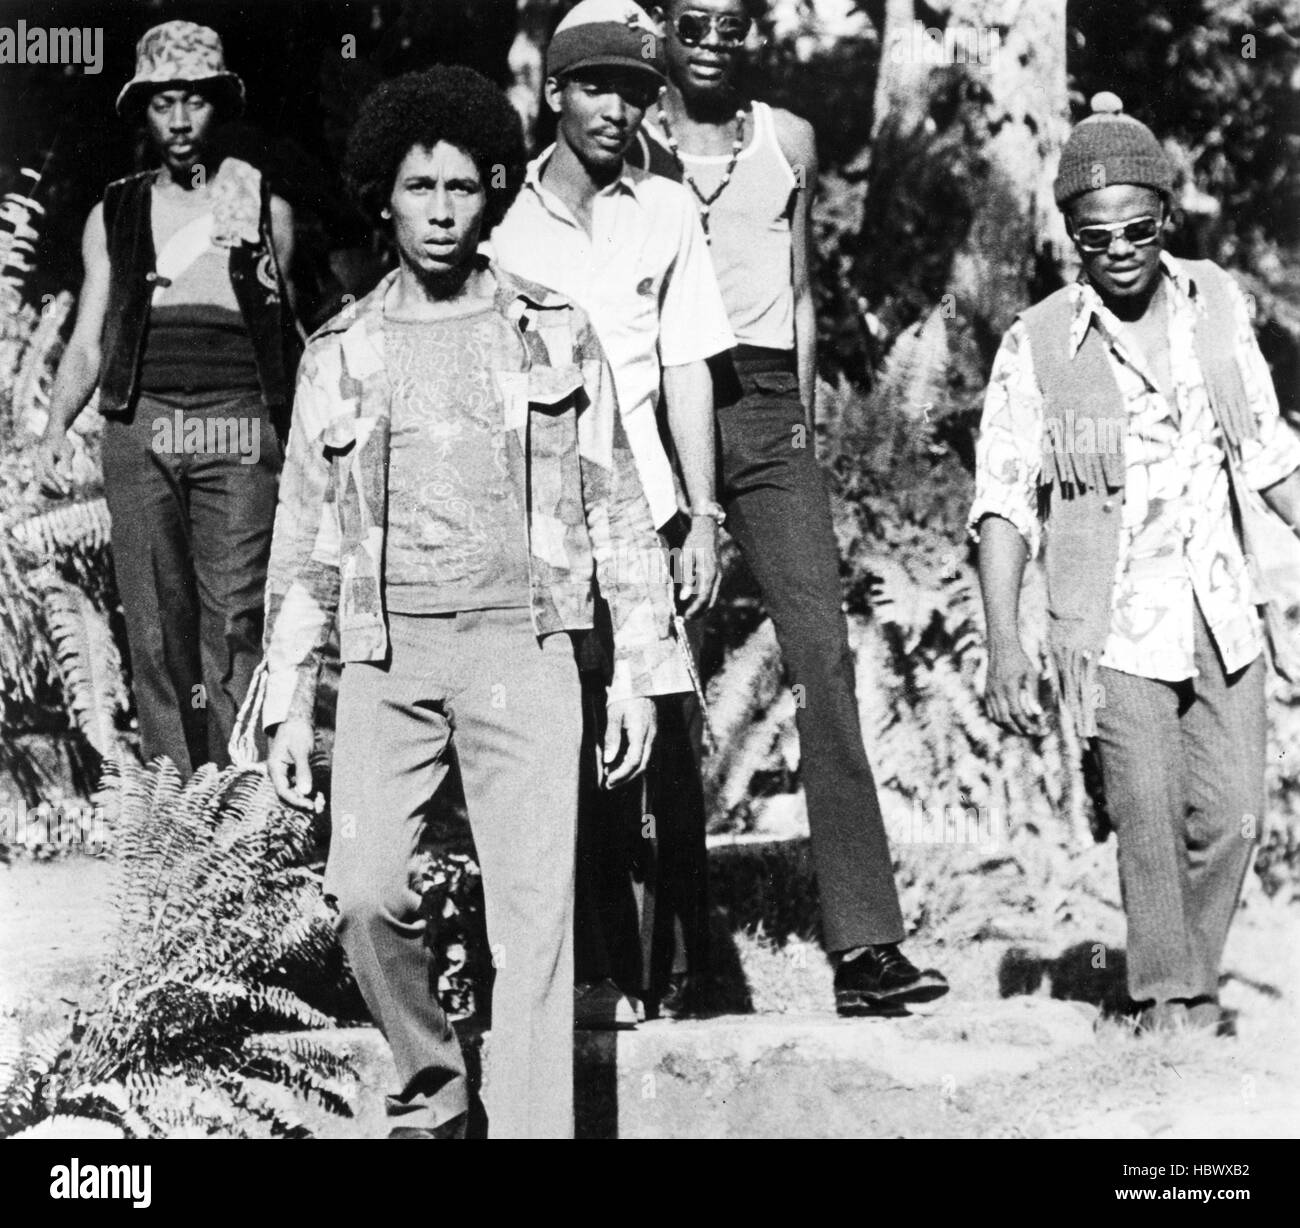 Bob Marley and the Wailers; (l-r) Bunny Wailer, Bob Marley, Carlton Barrett, Peter Tosh, Aston Barrett, 1972 Stock Photo